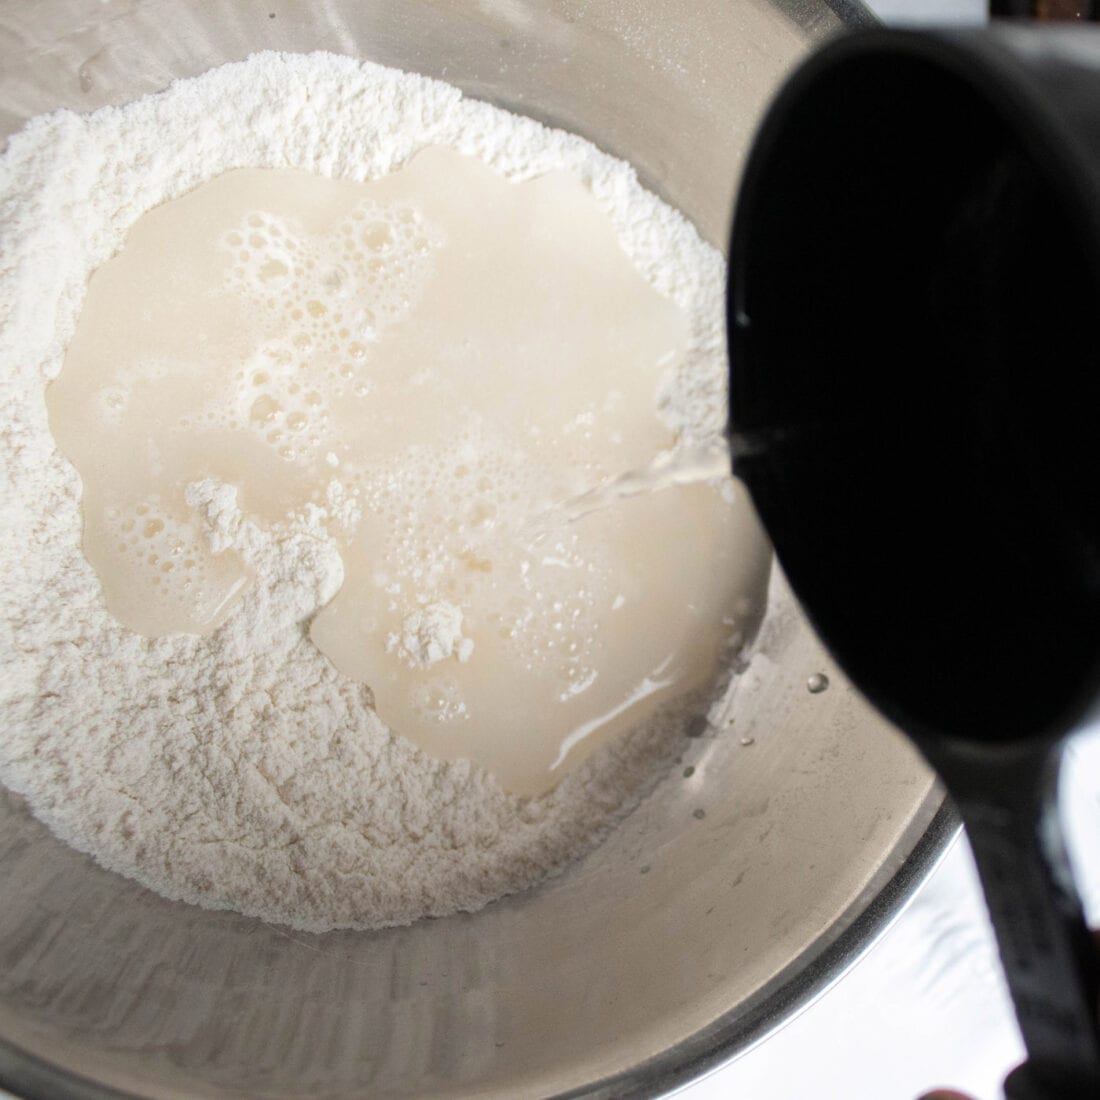 salt dough supplies in bowl